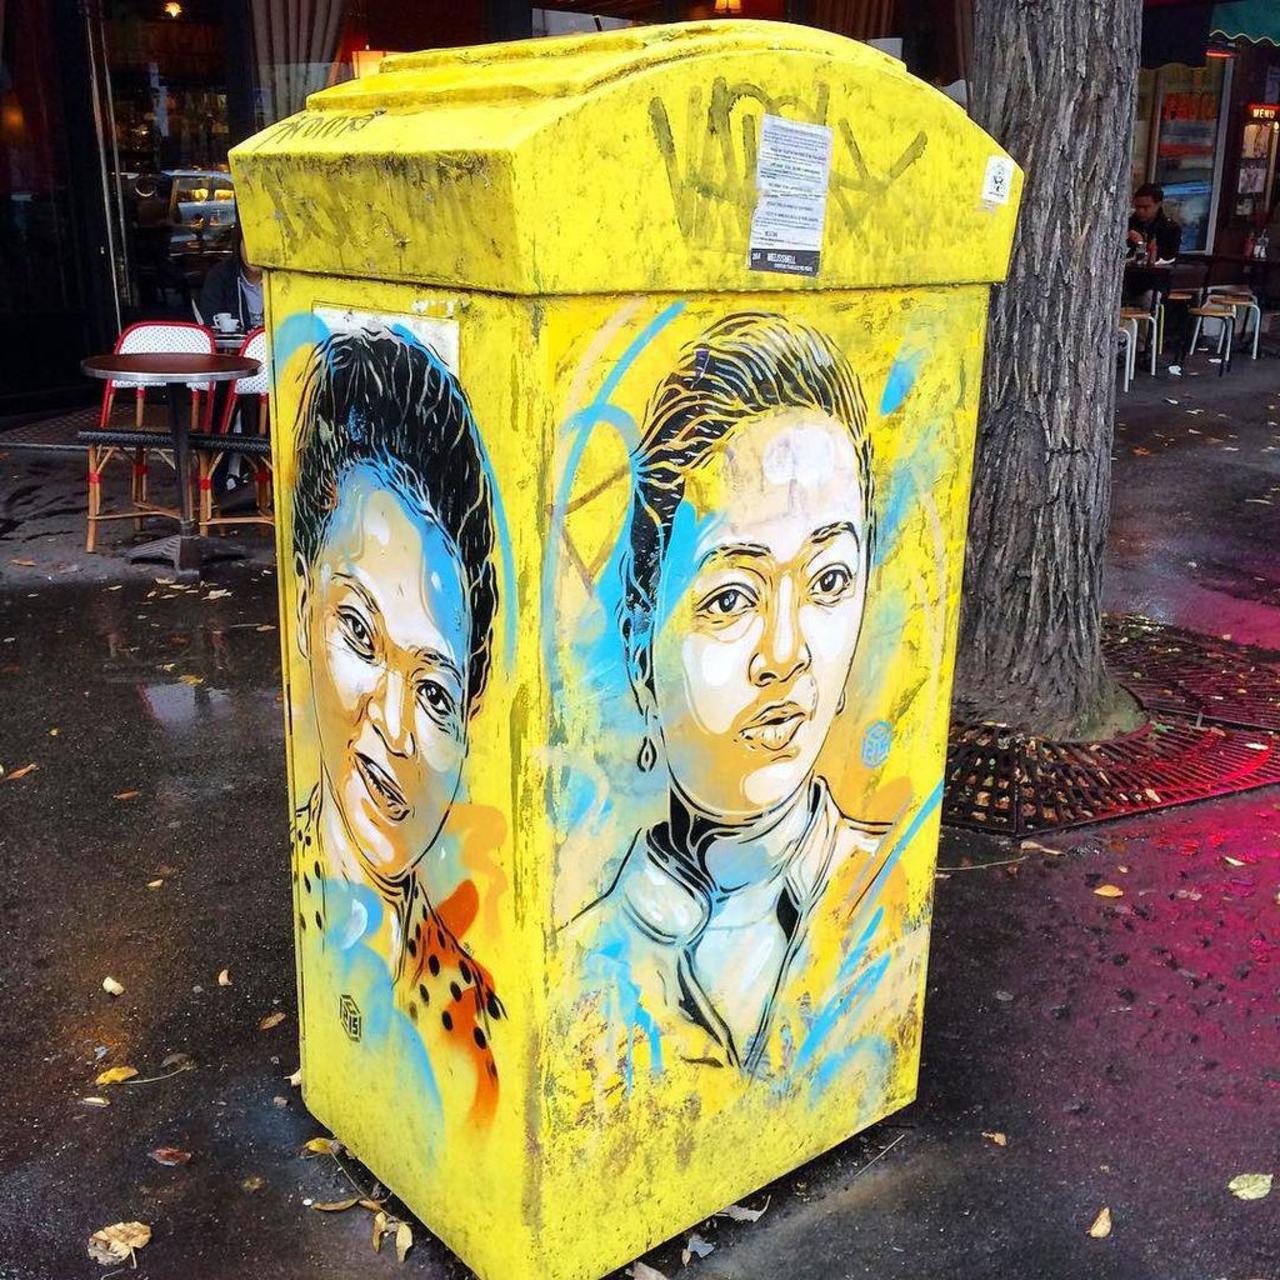 RT @StArtEverywhere: #streetart #mailbox by @christianguemy #c215 in #paris13 #graffiti #streetartparis #parisstreetart #boiteauxlettres… http://t.co/9a4MvBLgSH